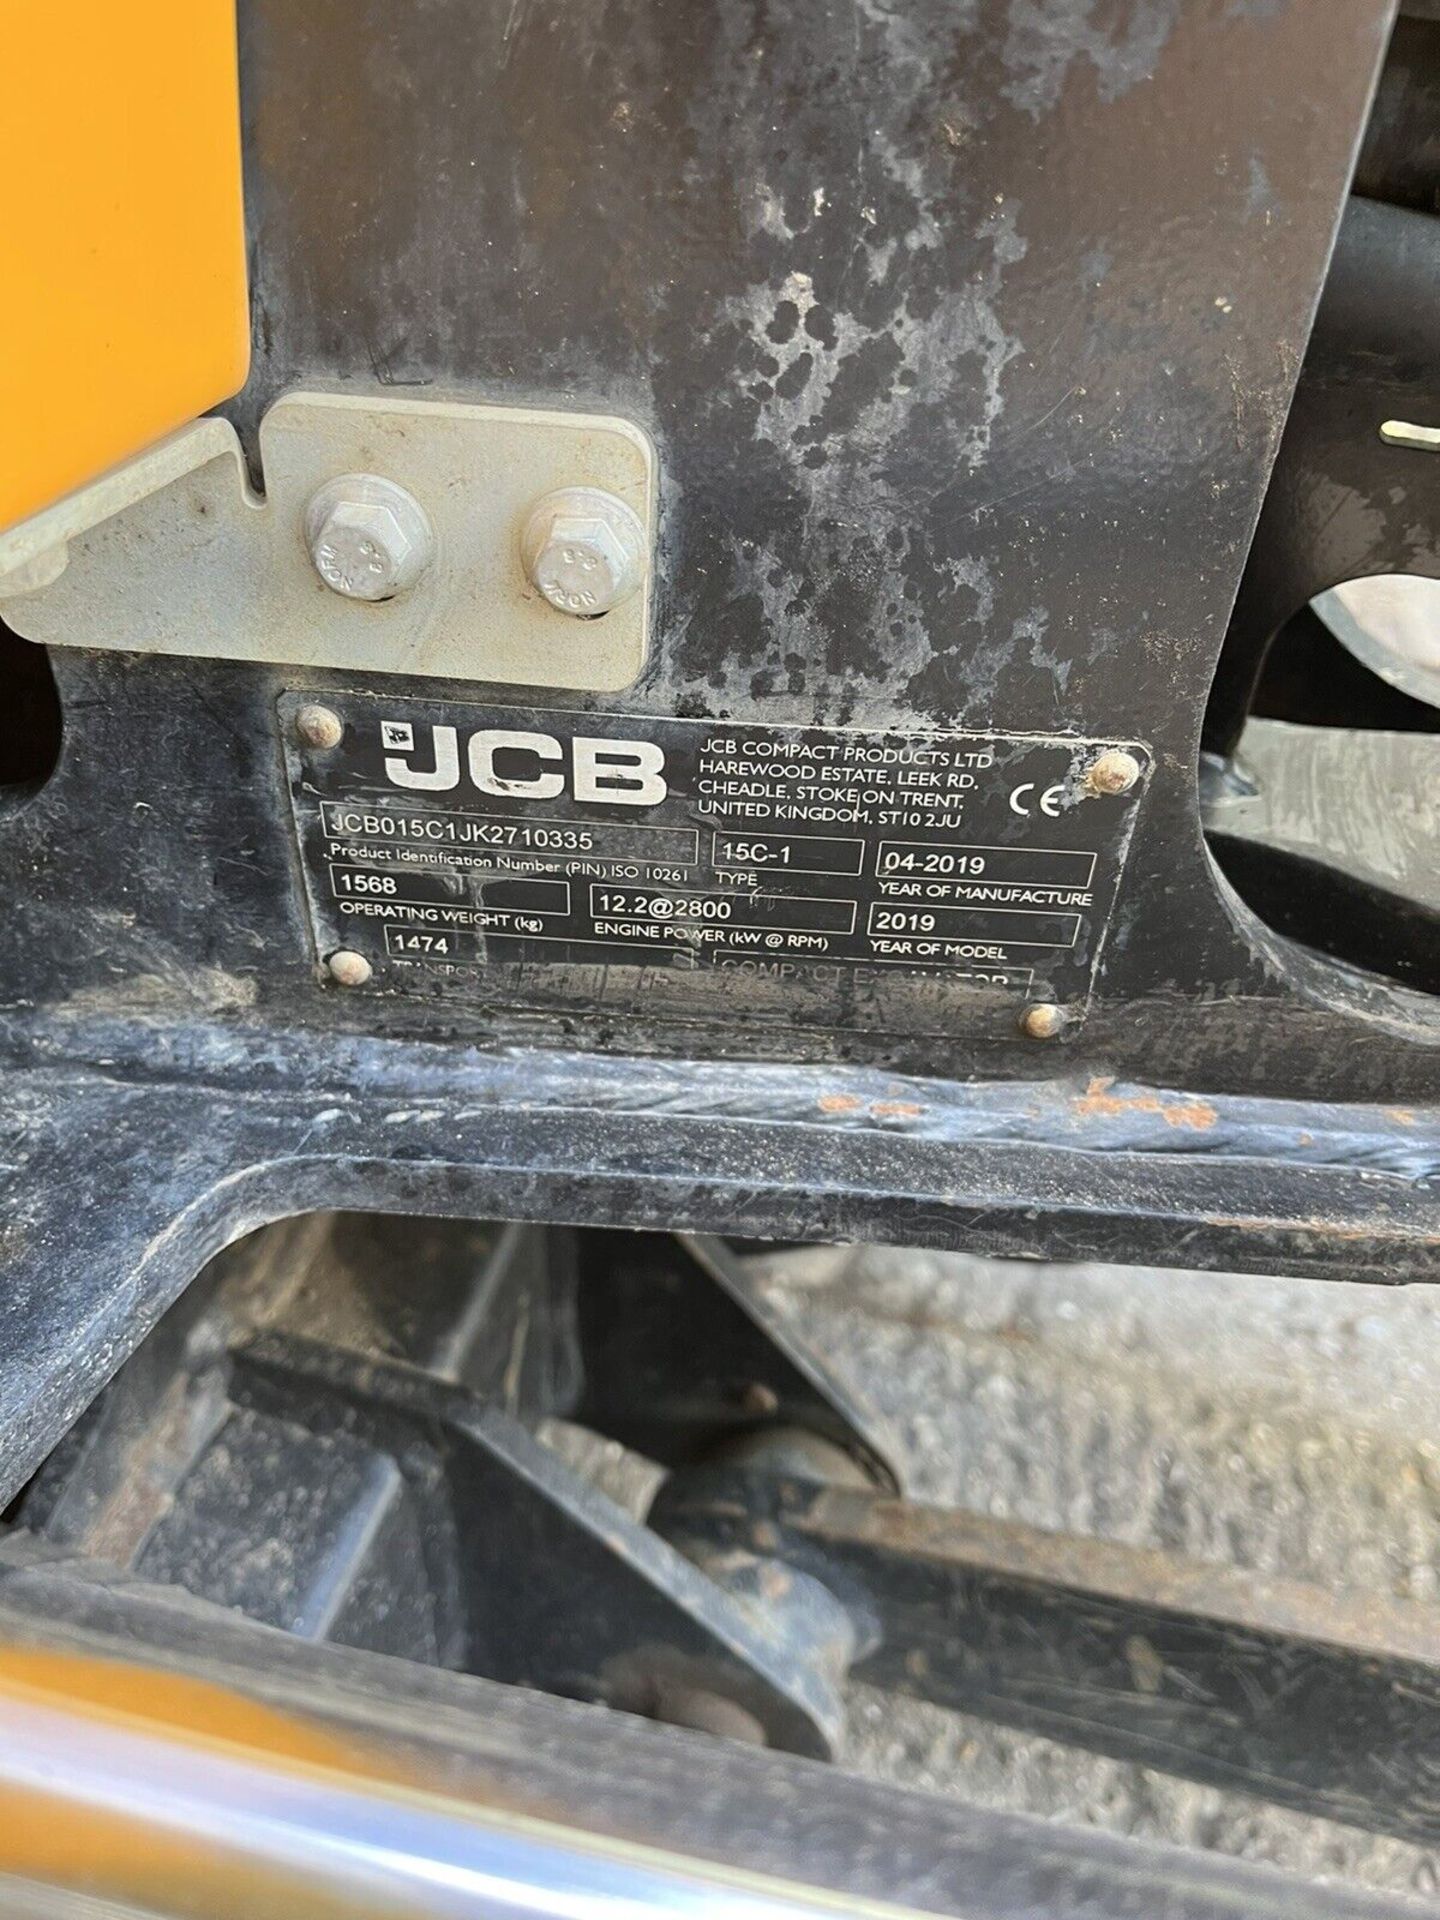 JCB 15C-1 MINI EXCAVATOR 2019 ONLY 860hrs, Mini Digger - Image 7 of 8